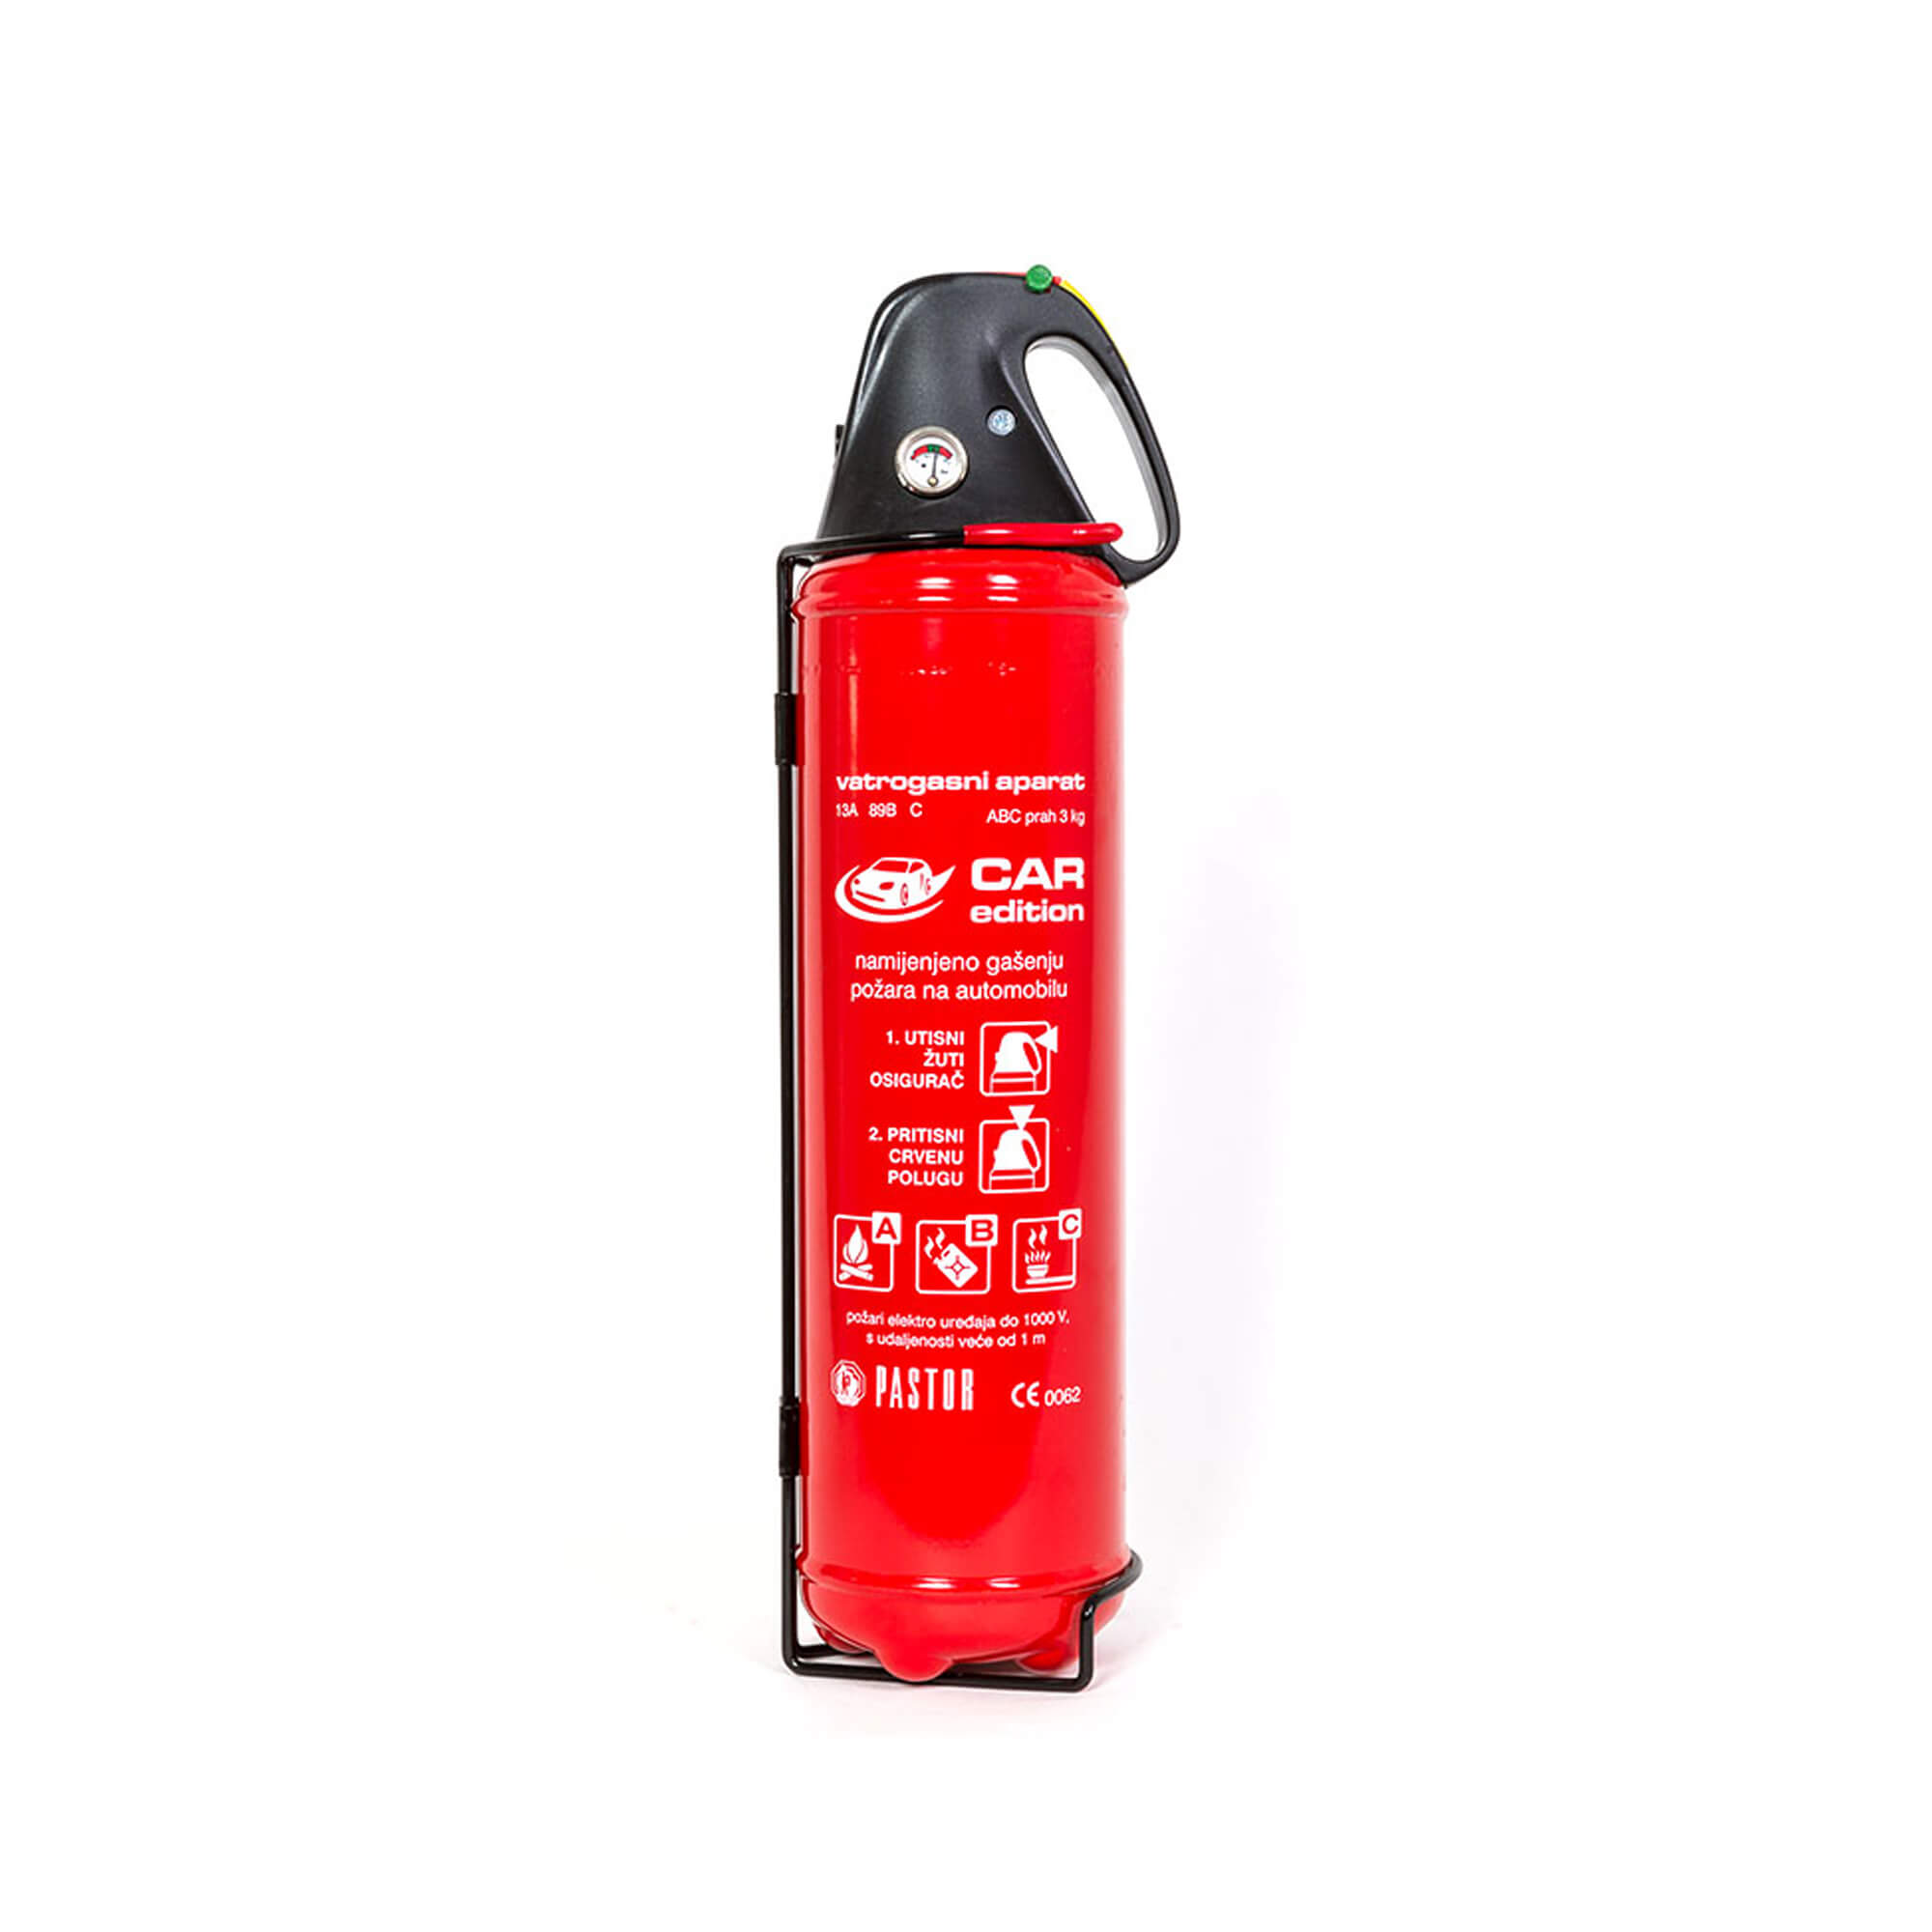 Pastor Fire Extinguisher Dry Powder, Stored Pressure 3kg Car Edition image